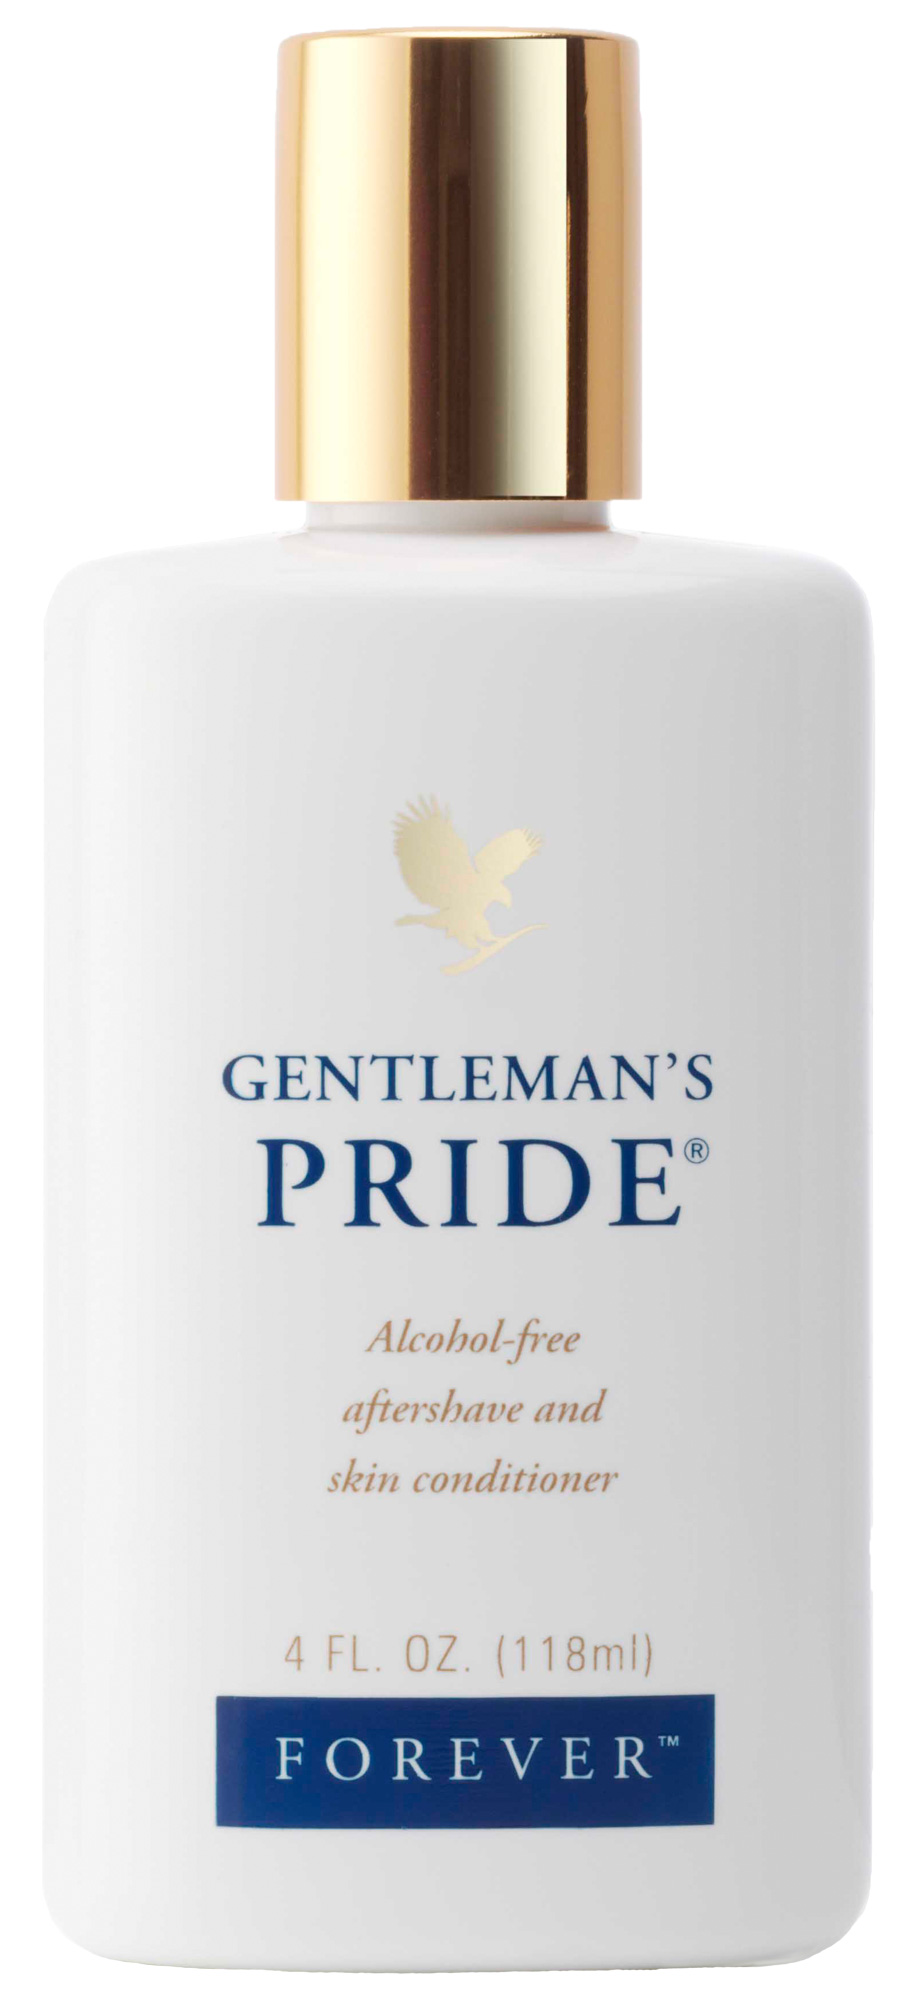 FOREVER Gentleman's Pride